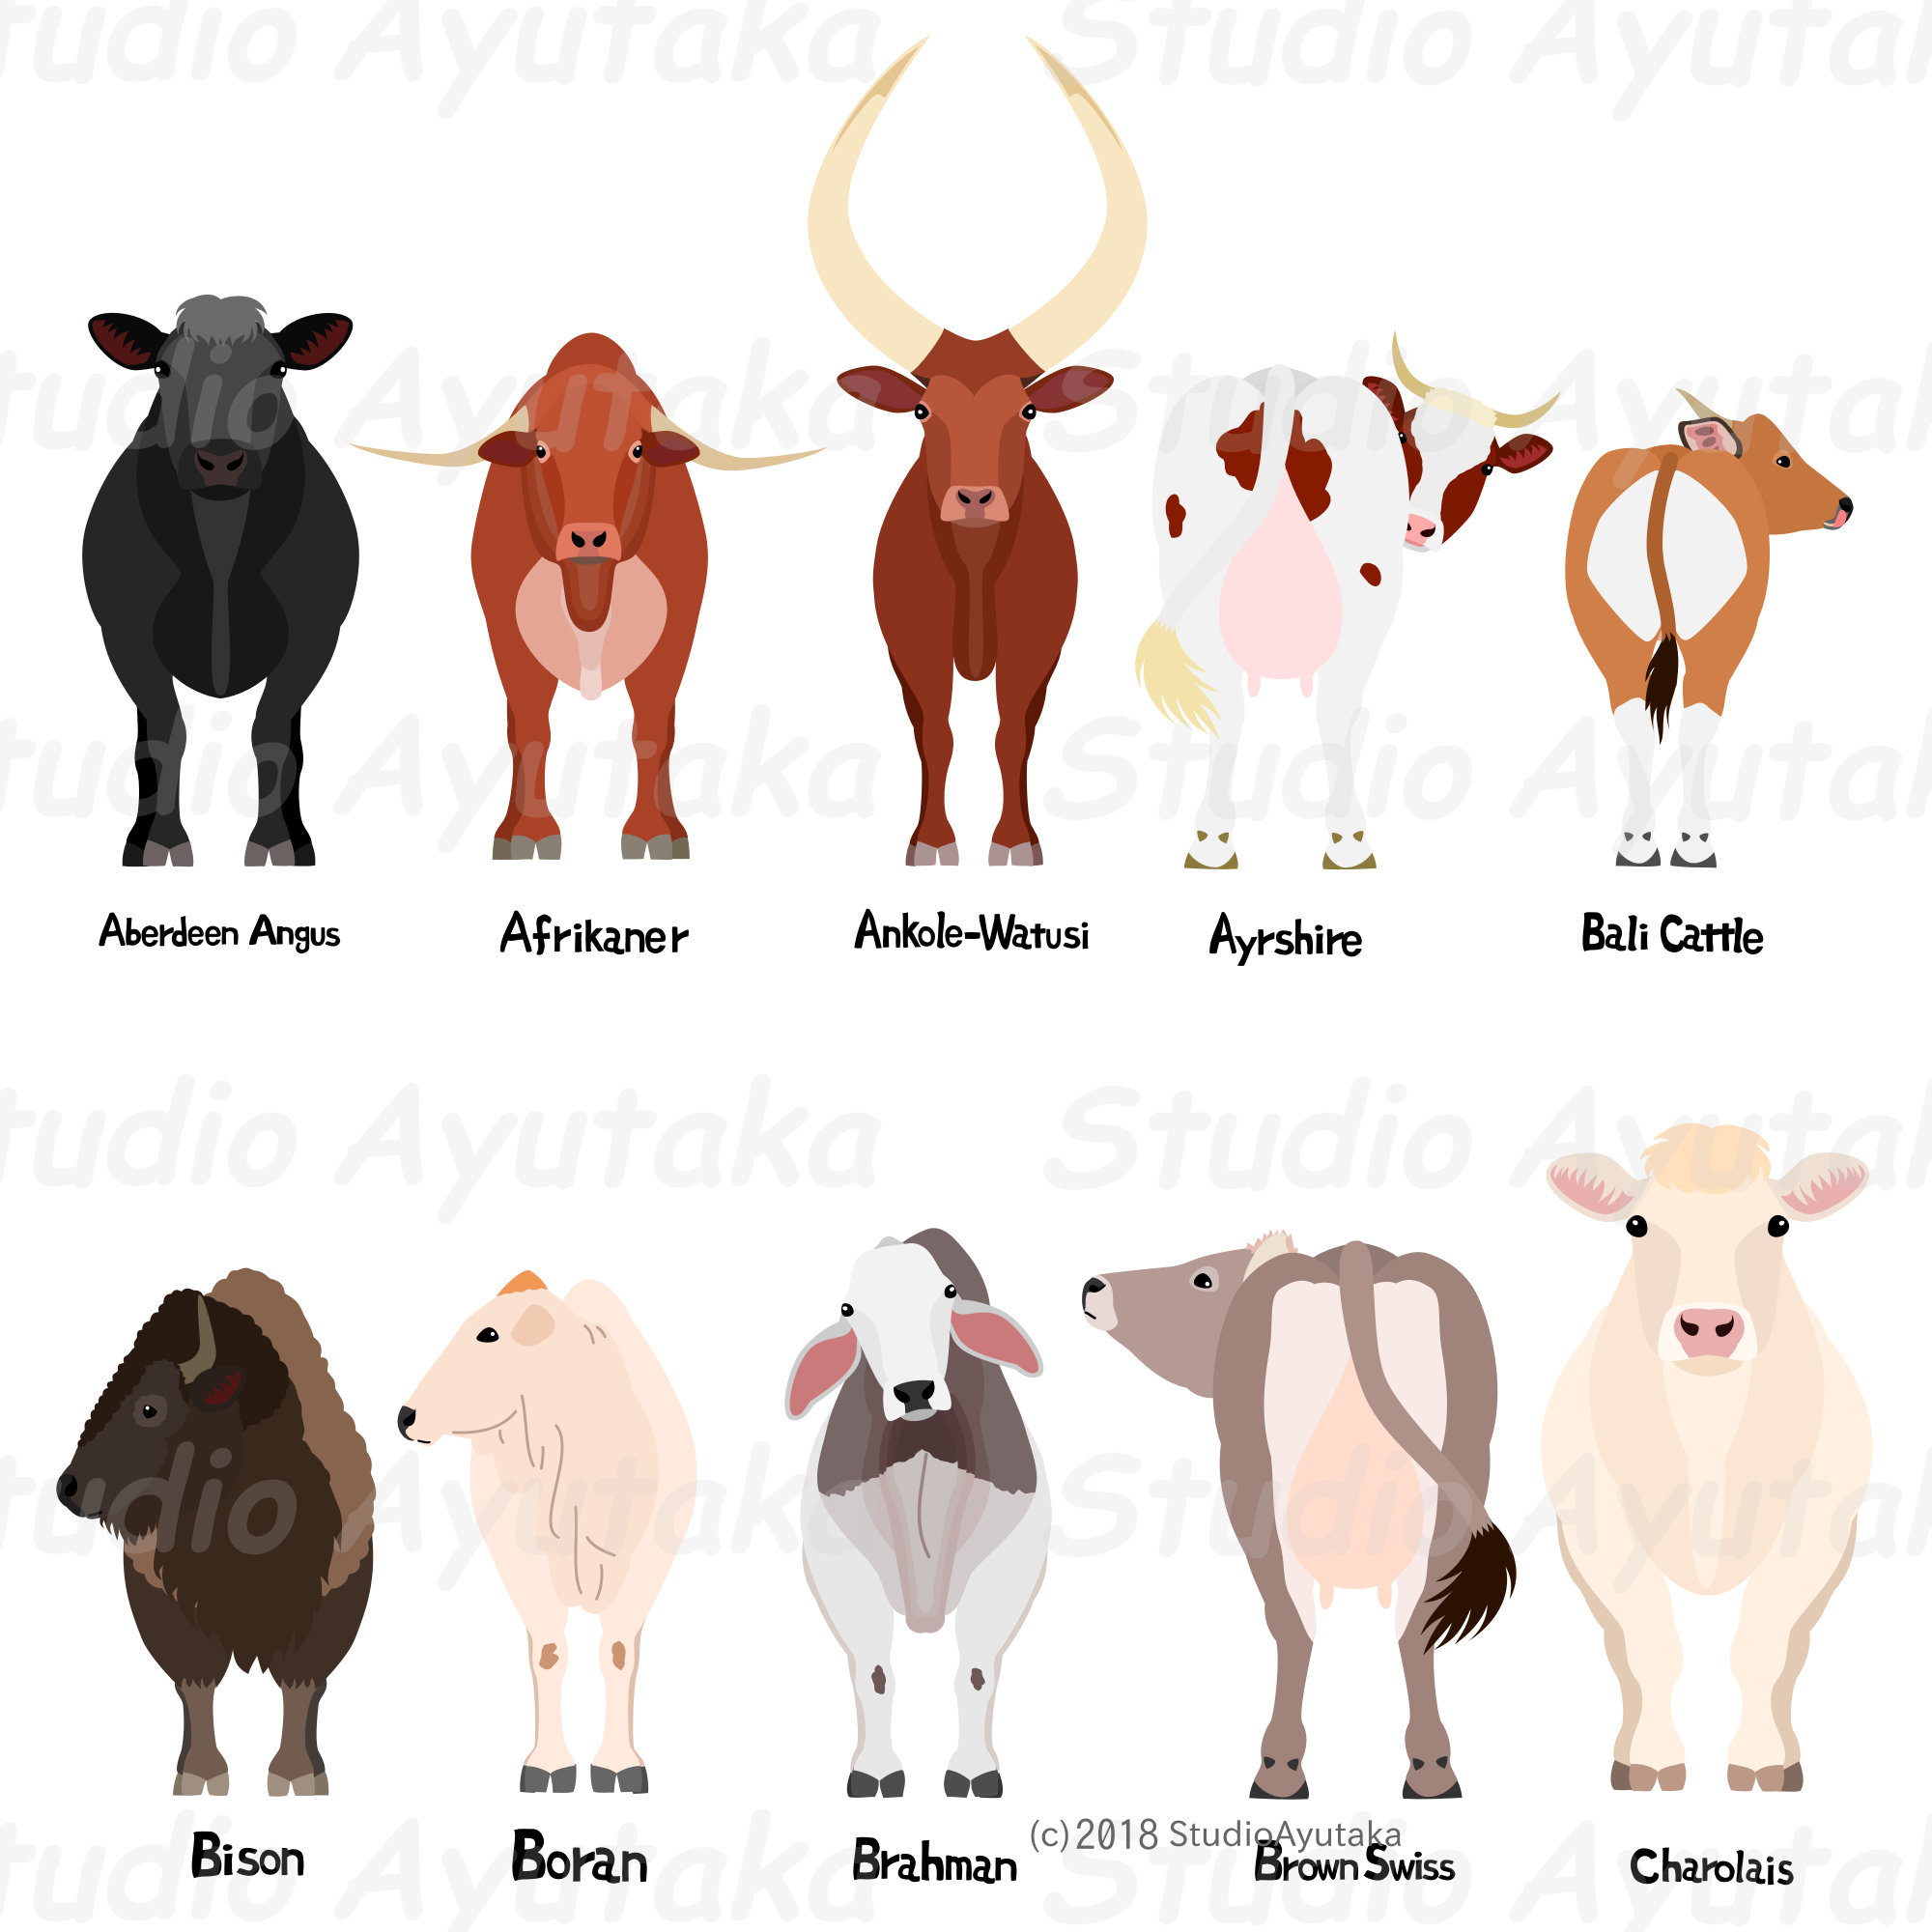 Ayrshire-koeienras